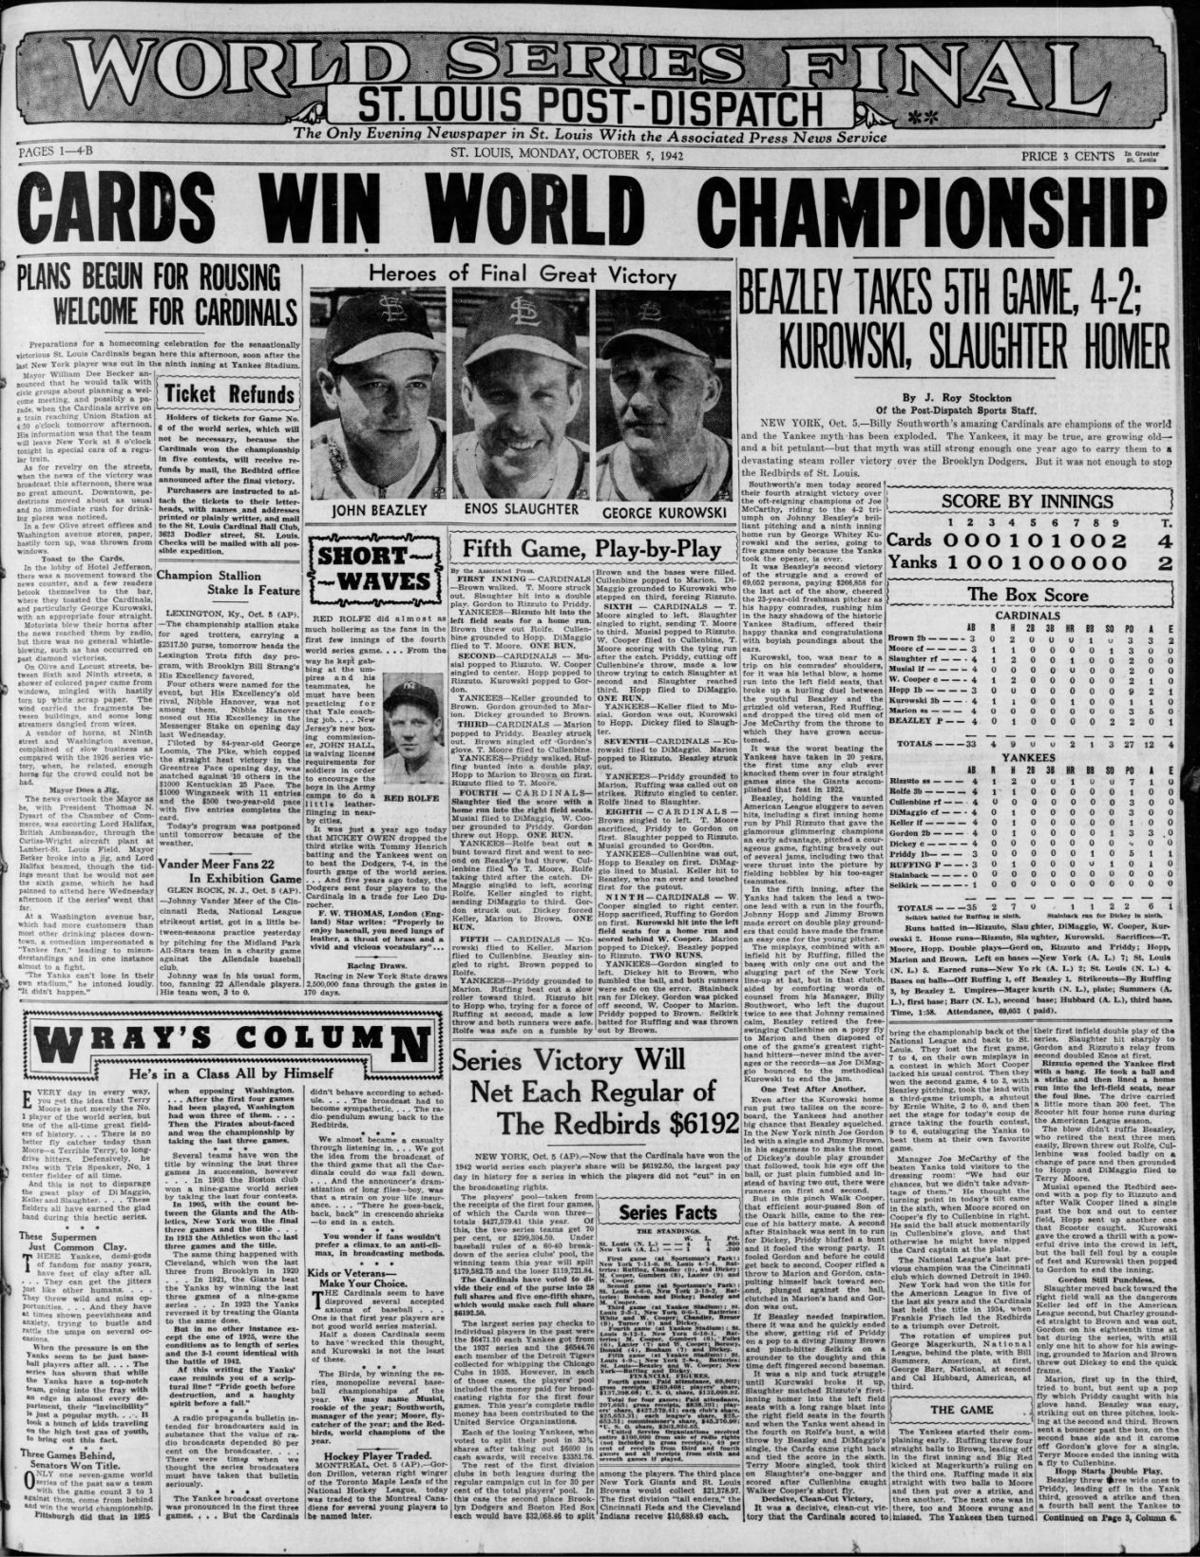 Oct. 5, 1942: Cardinals Win World Series | Post-Dispatch Archives | www.bagsaleusa.com